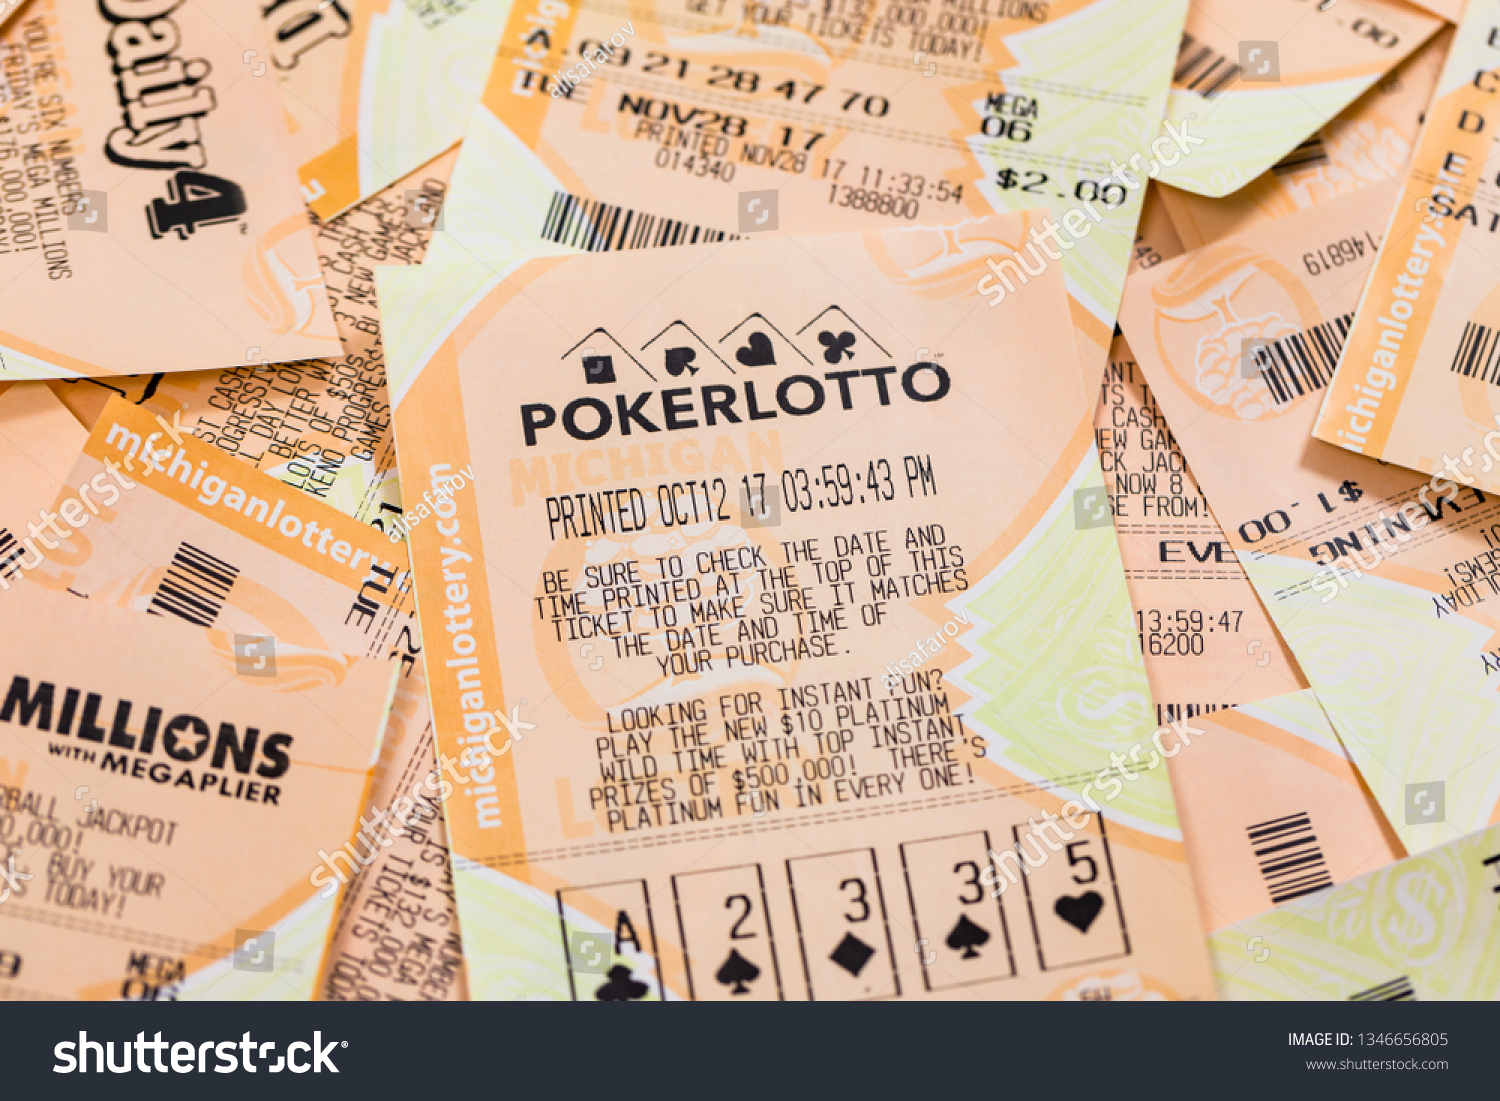 poker lotto company